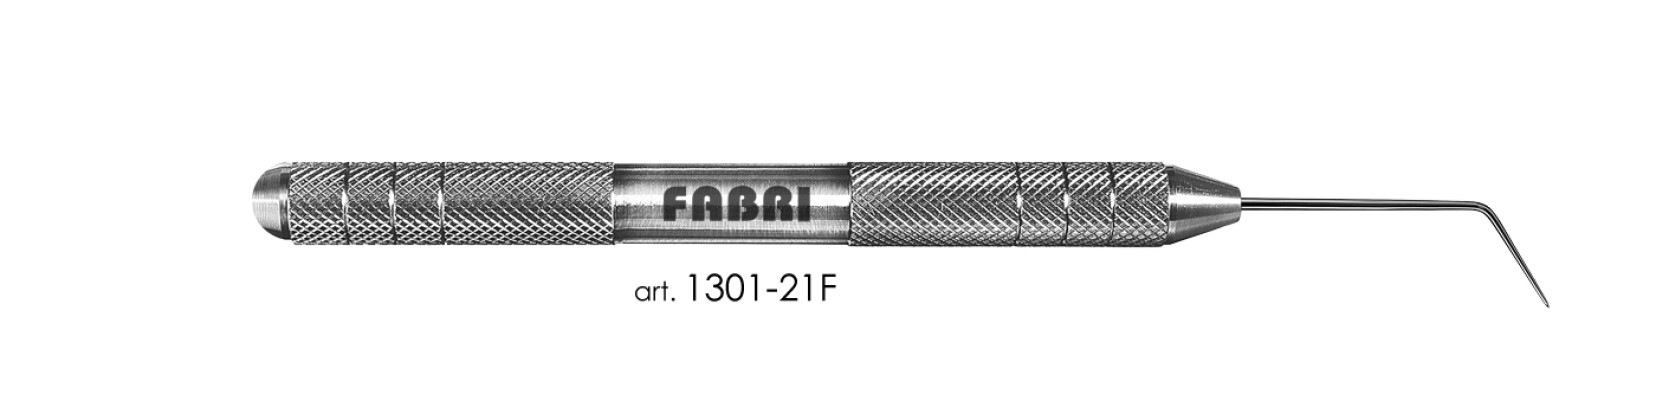 ФАБРИ Fabri - Зонд общего обследования  (арт. 1301-21 F )